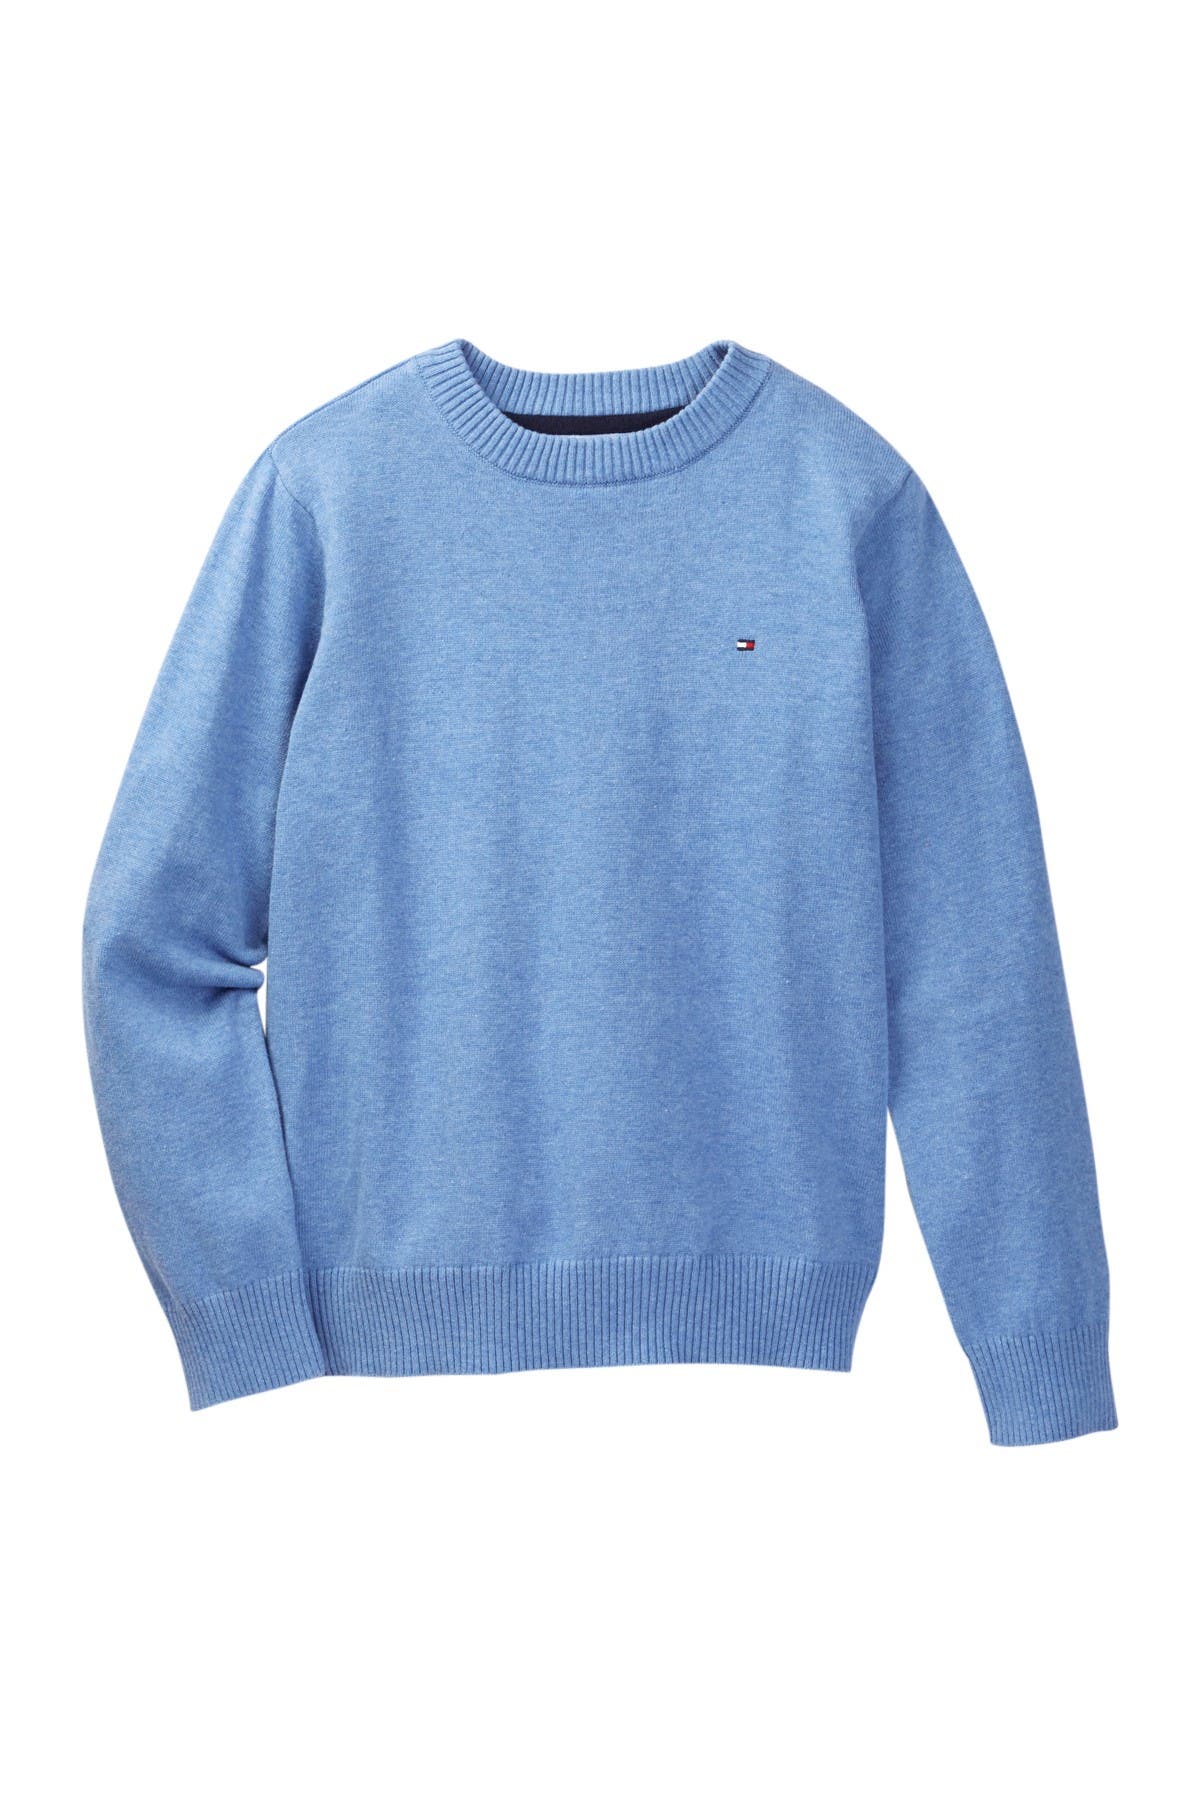 tommy hilfiger blue sweater